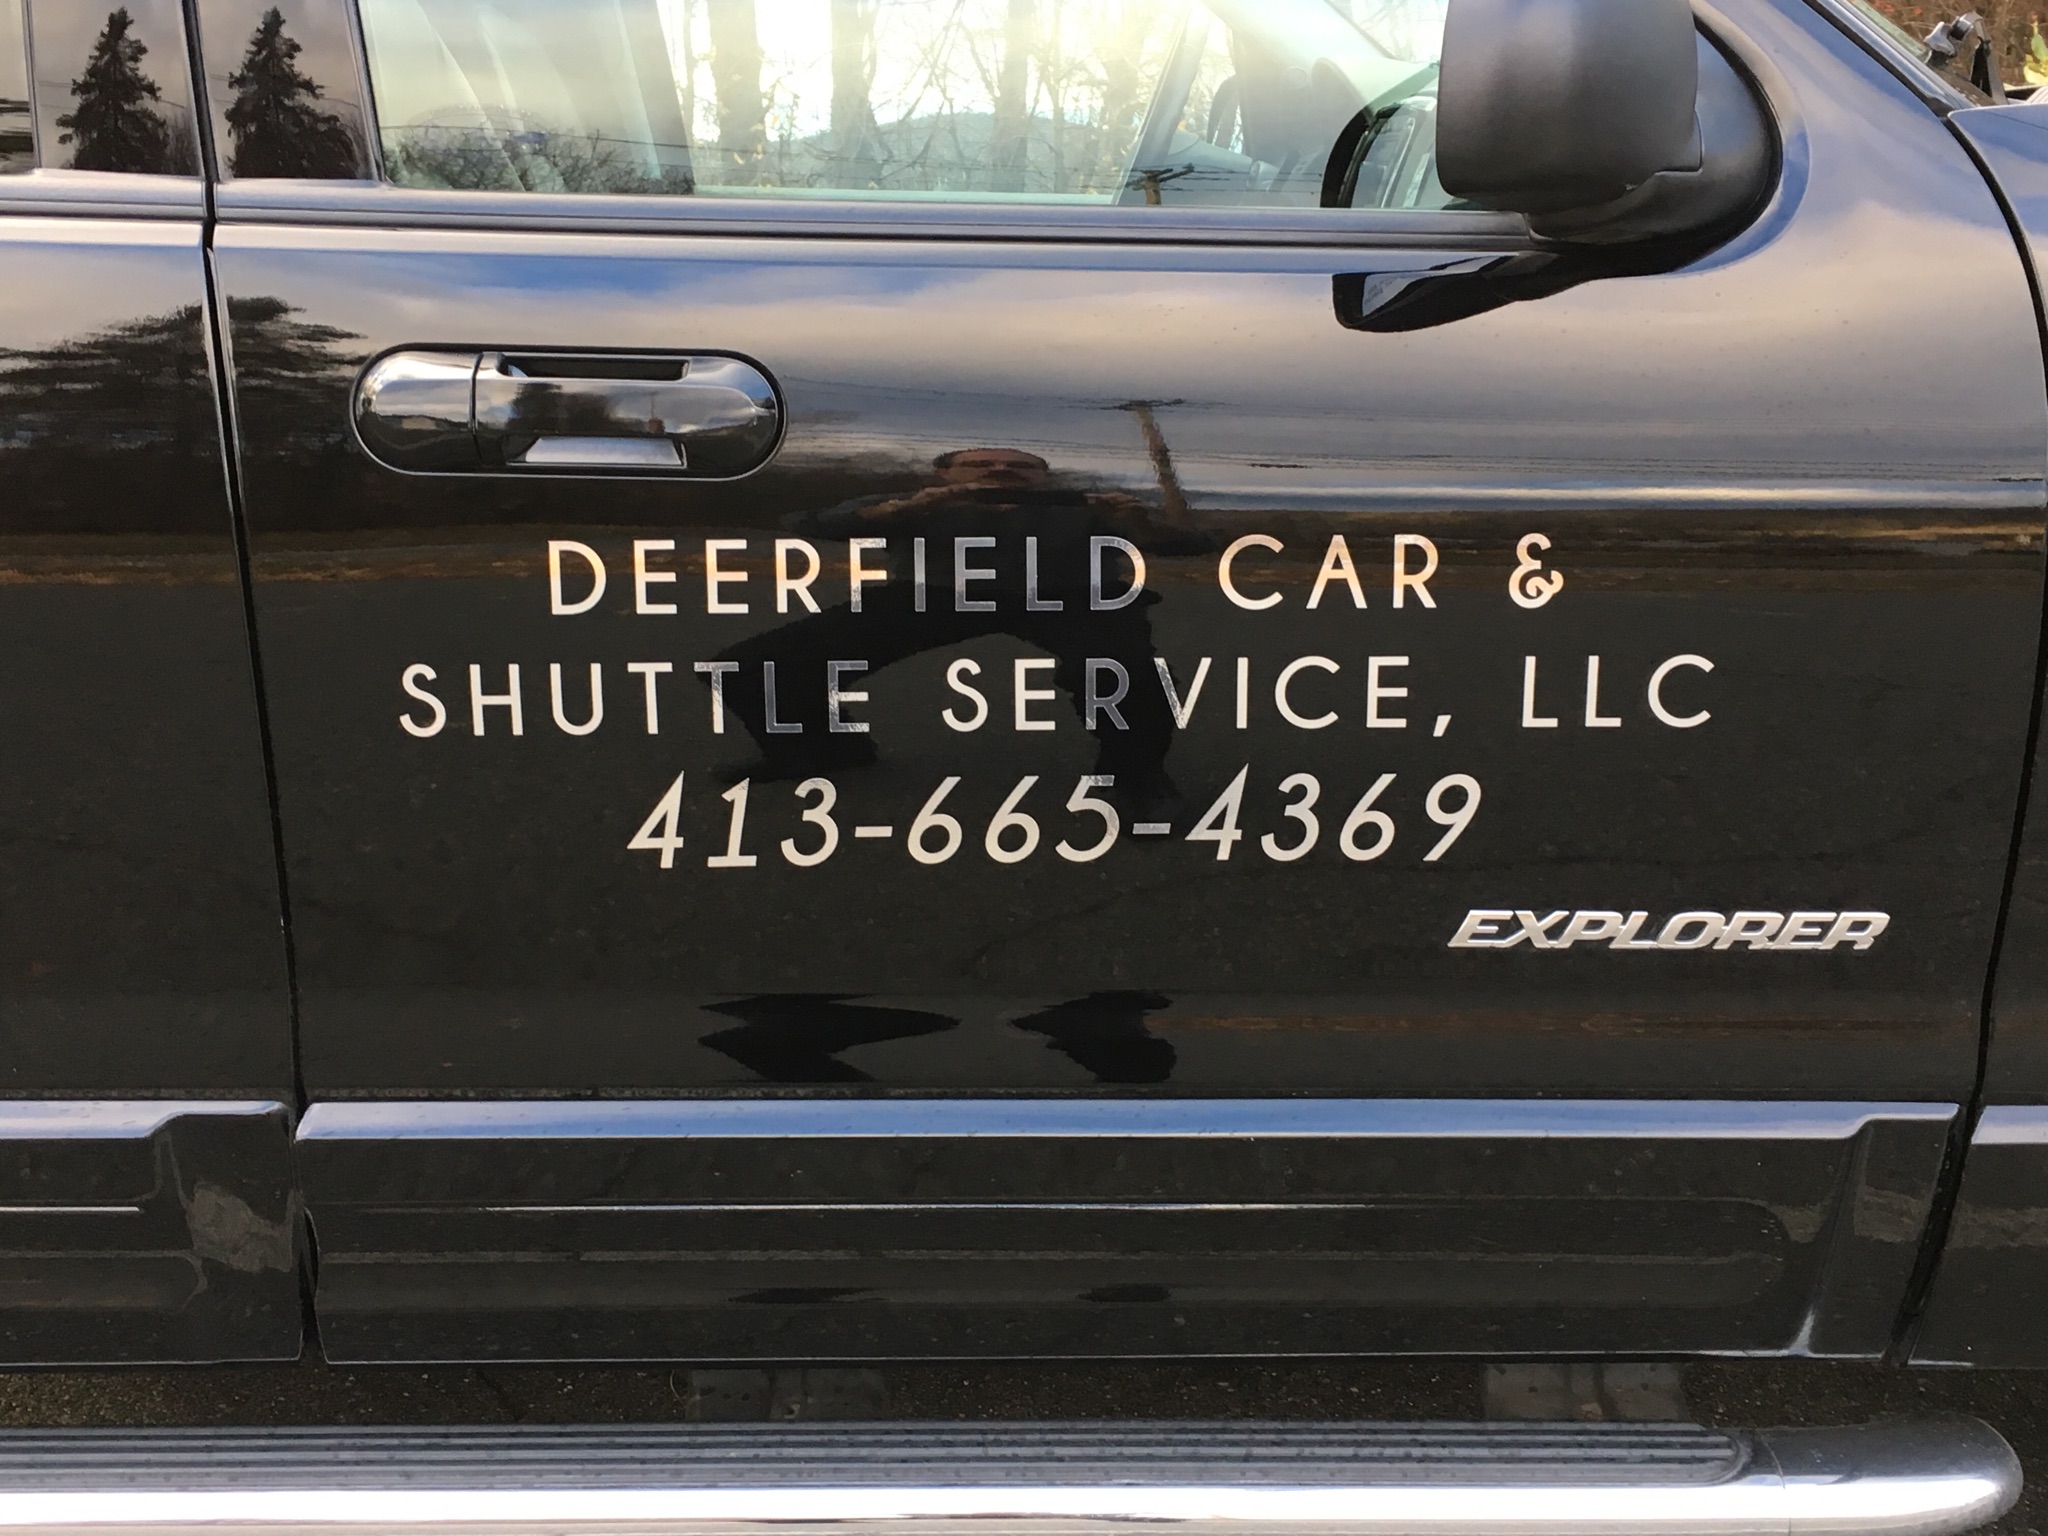 Deerfield Car & Shuttle Service